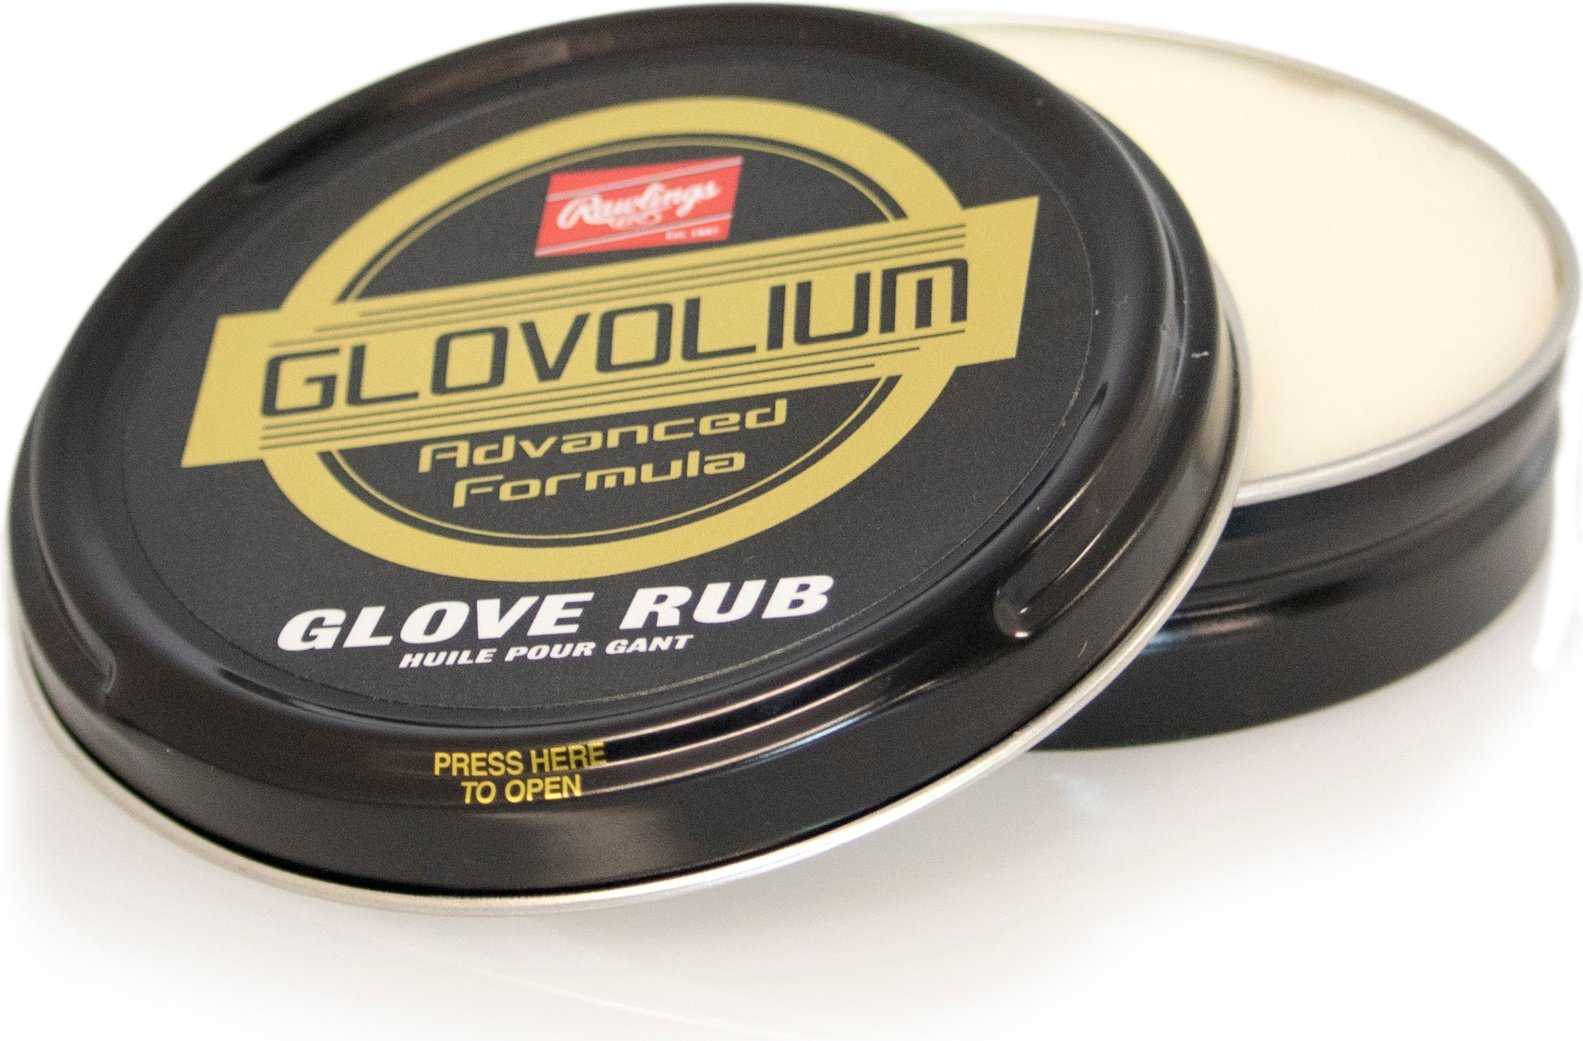 Rawlings Glovolium Glove Rub - HIT a Double